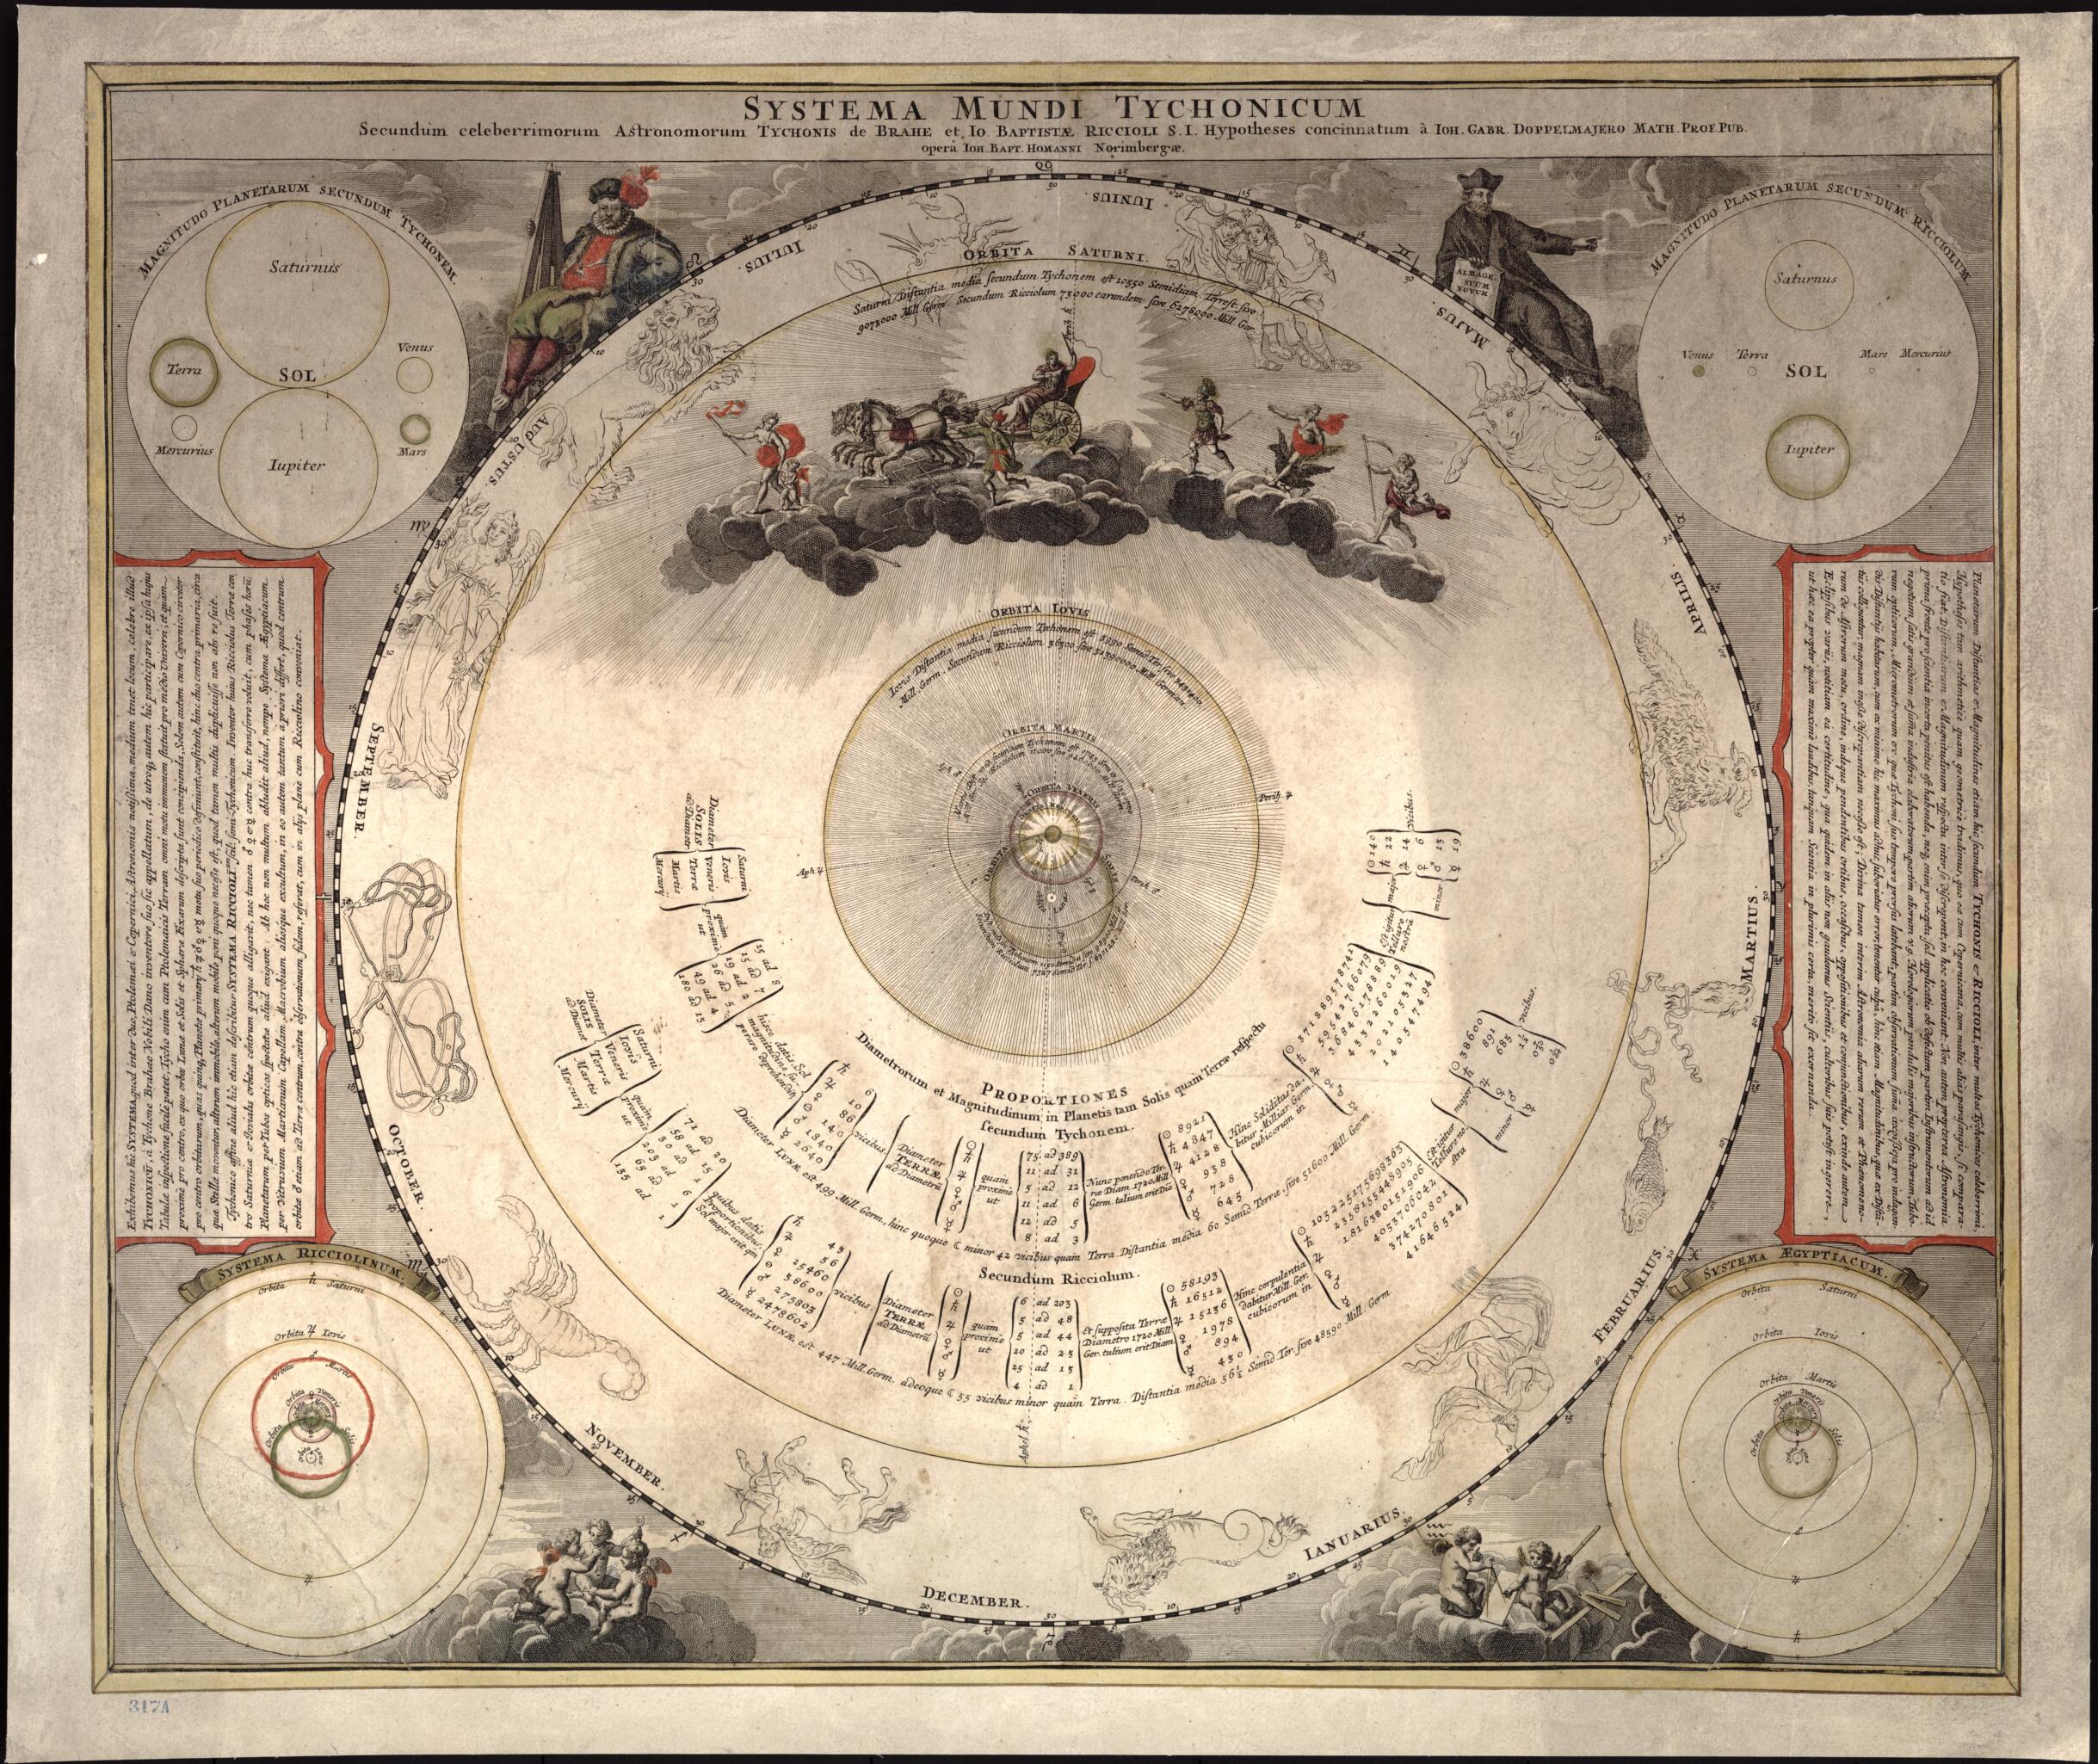 This old map of Systema Mundi Tychonicum : Secundum Celeberrimorum Astronomorum Tychonis De Brahe Et Io. Baptistae Riccioli S.I. Hypotheses Concinnatum from 1716 was created by Johann Baptist Homann in 1716